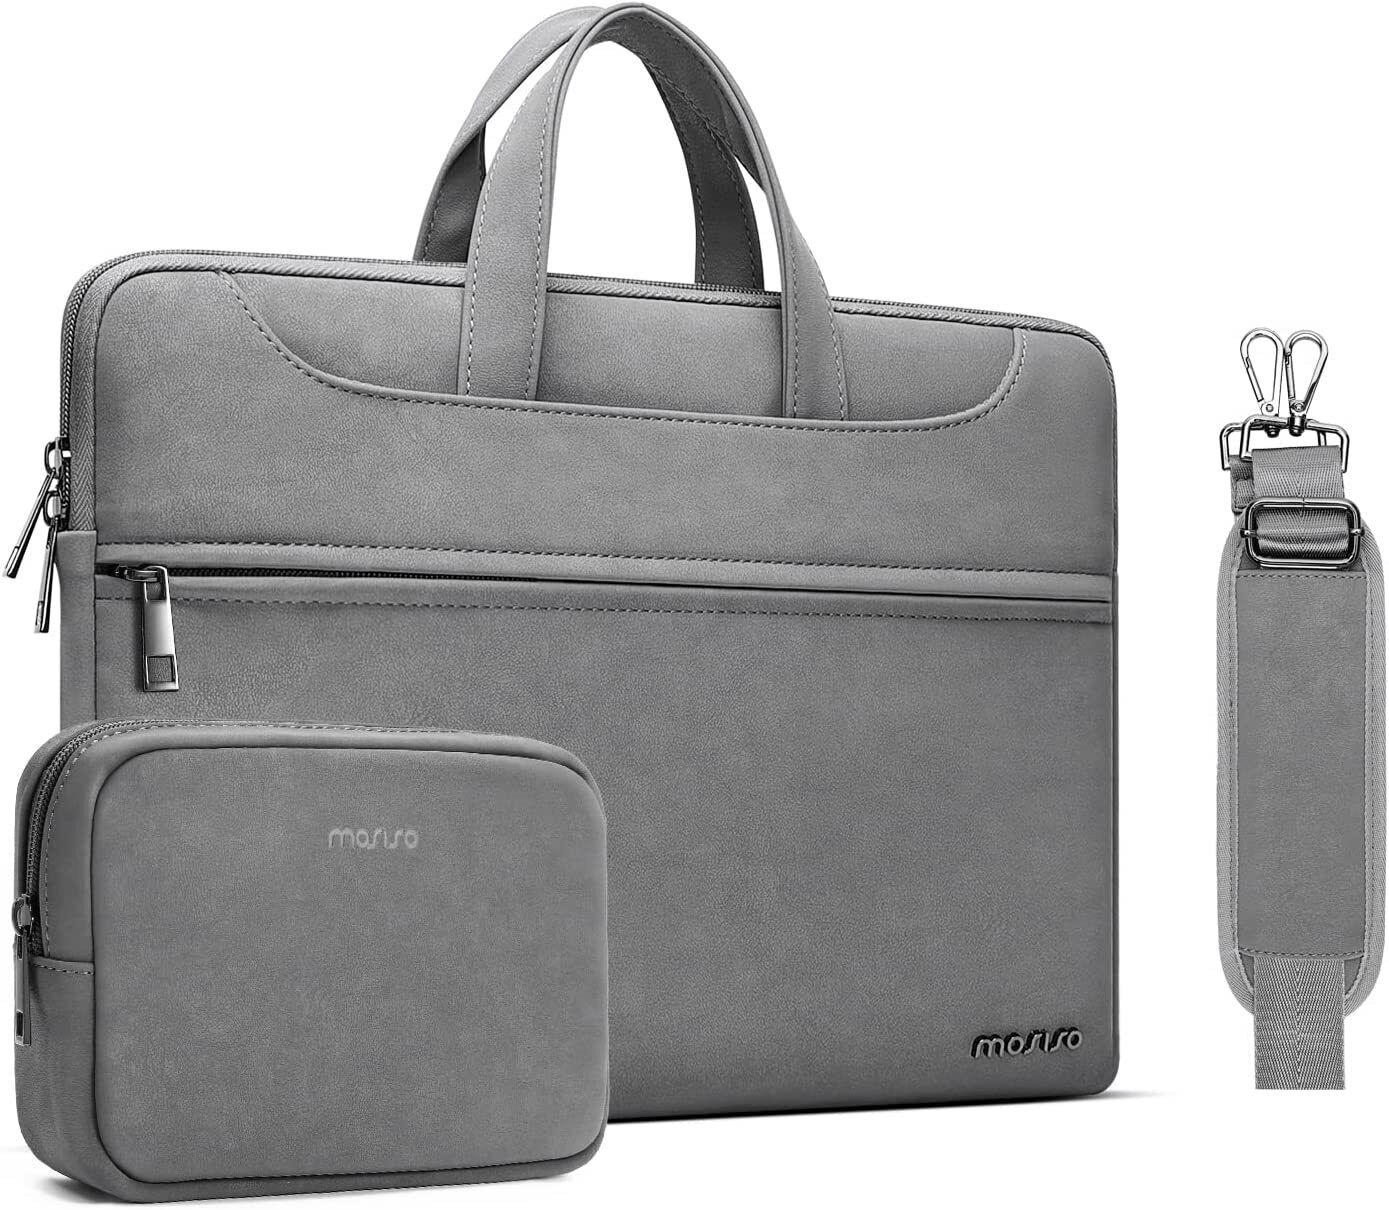 PU Leather Waterproof Laptop Shoulder Bag for 13-13.3 inch Notebook Sleeve Case